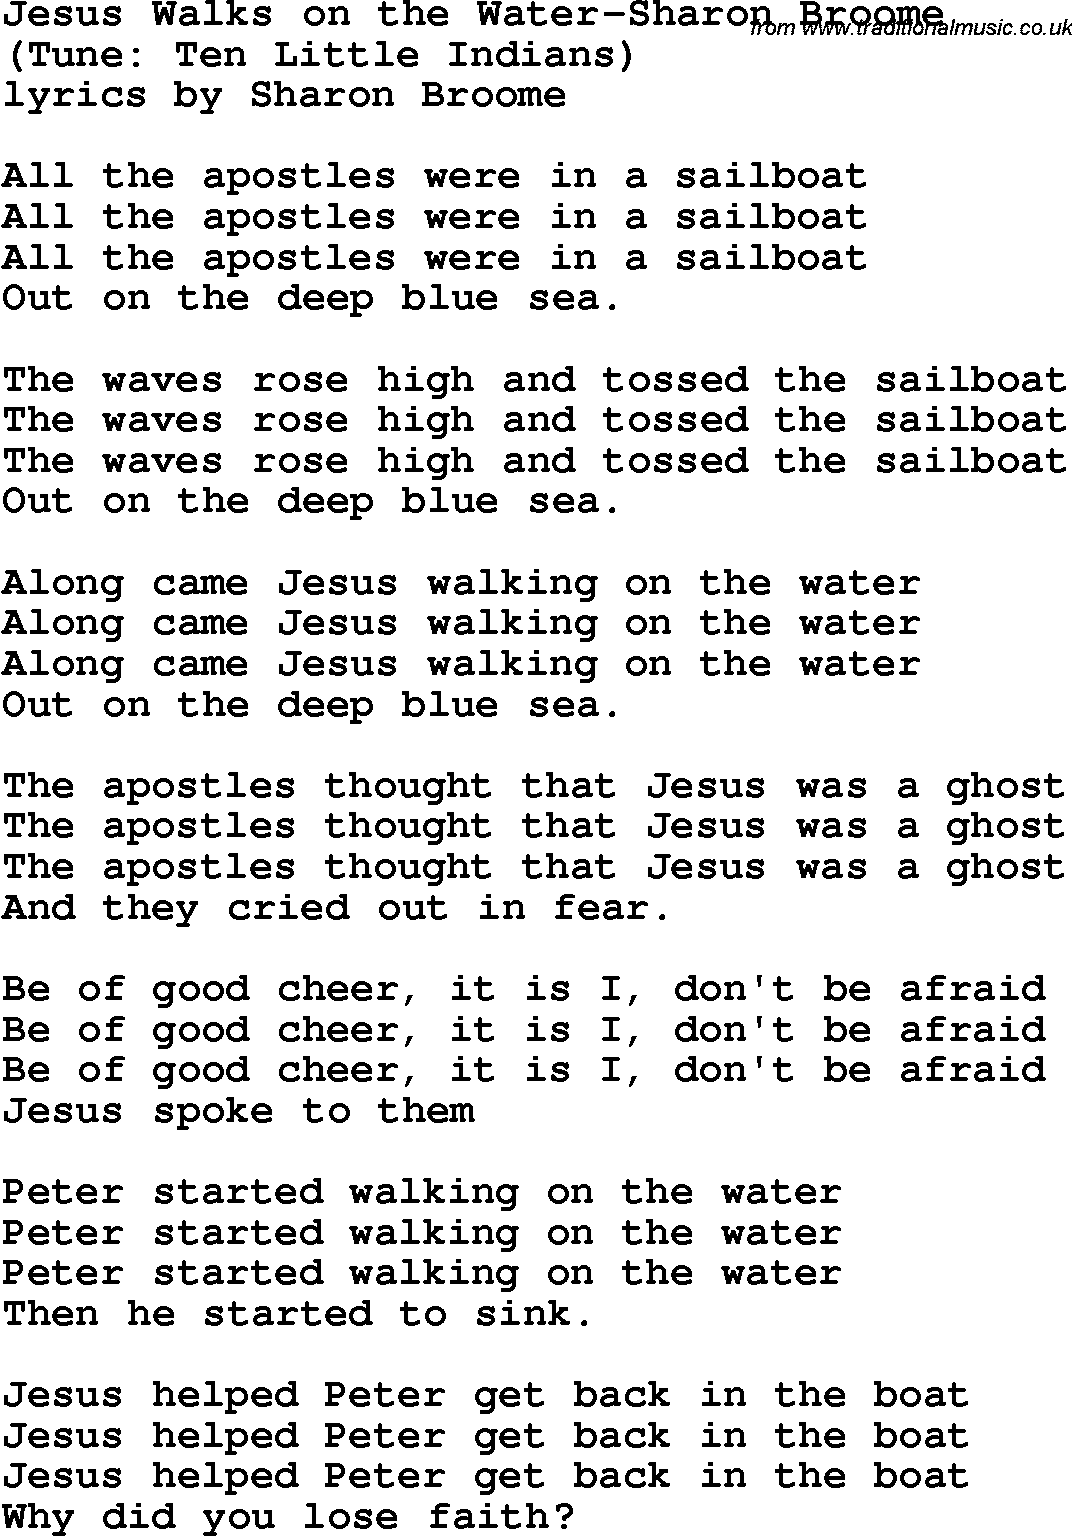 Christian Chlidrens Song Jesus Walks On The Water-Sharon Broome Lyrics